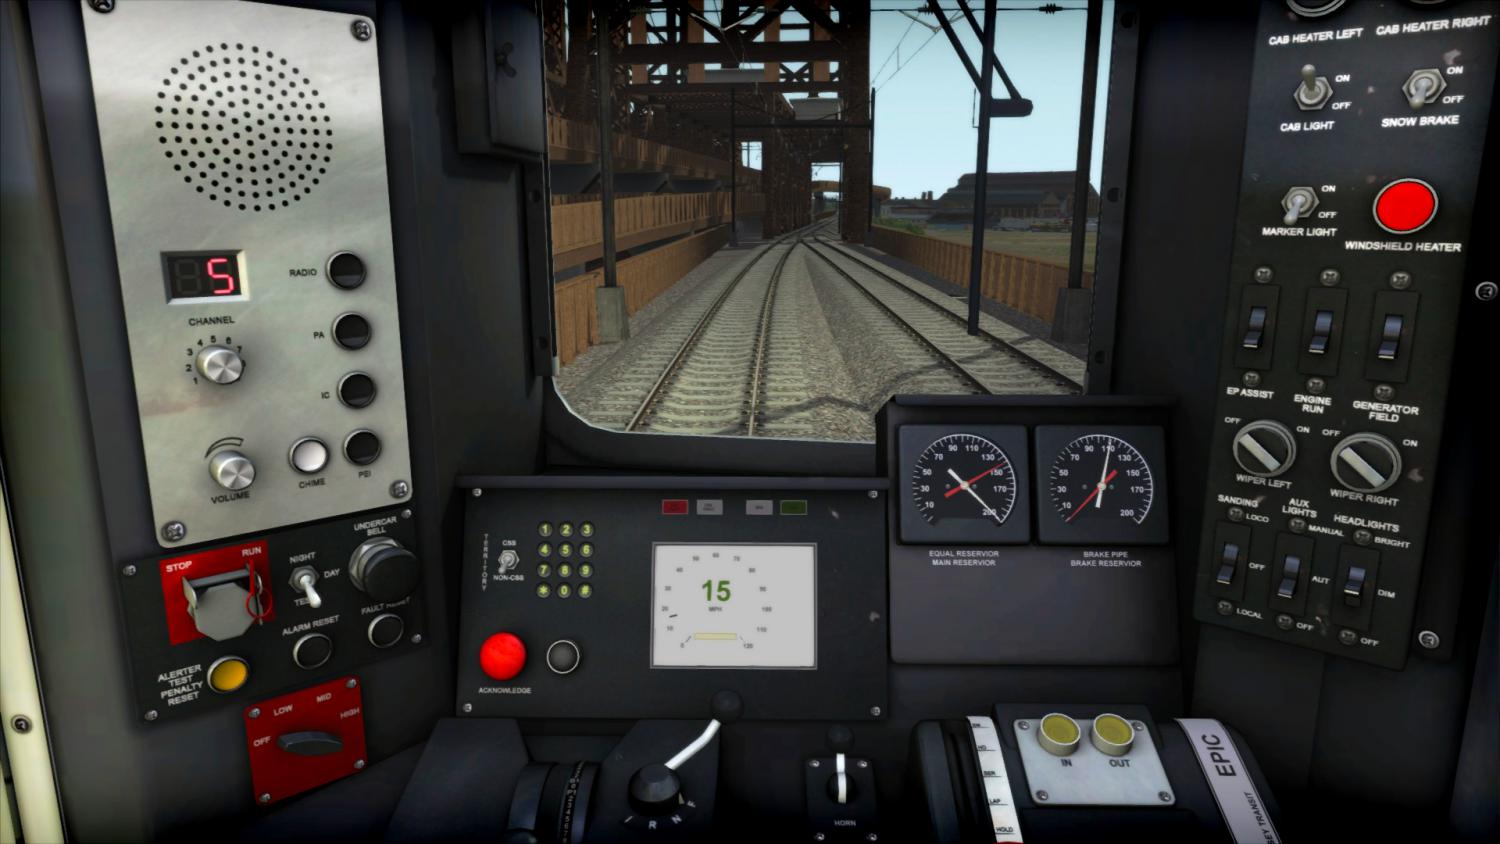 Train Simulator 2017 Standard Edition